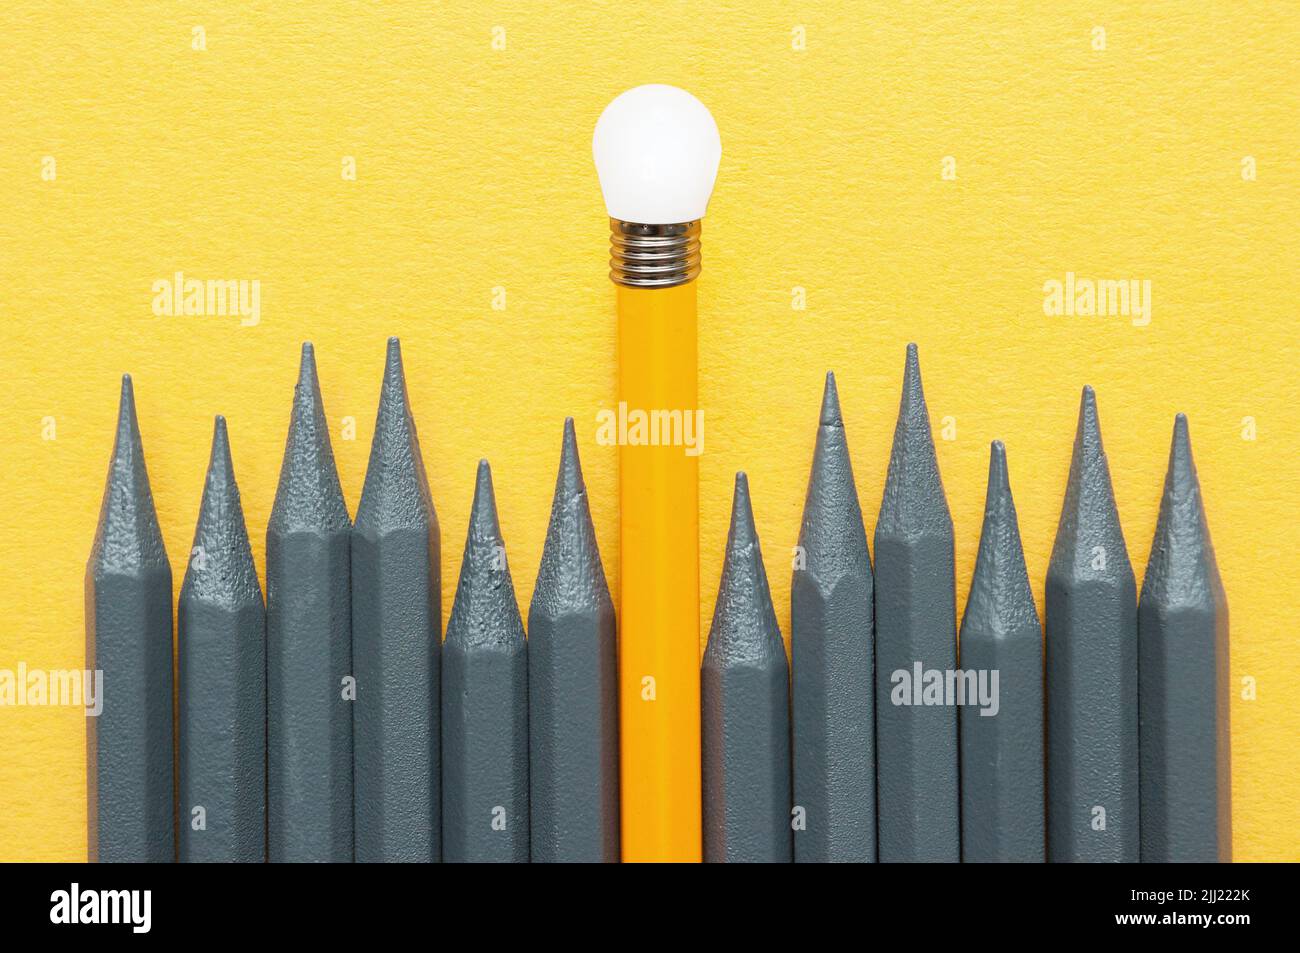 Orange pencil standing out amongst grey pencils with light bulb tip, unique ideas success concept Stock Photo